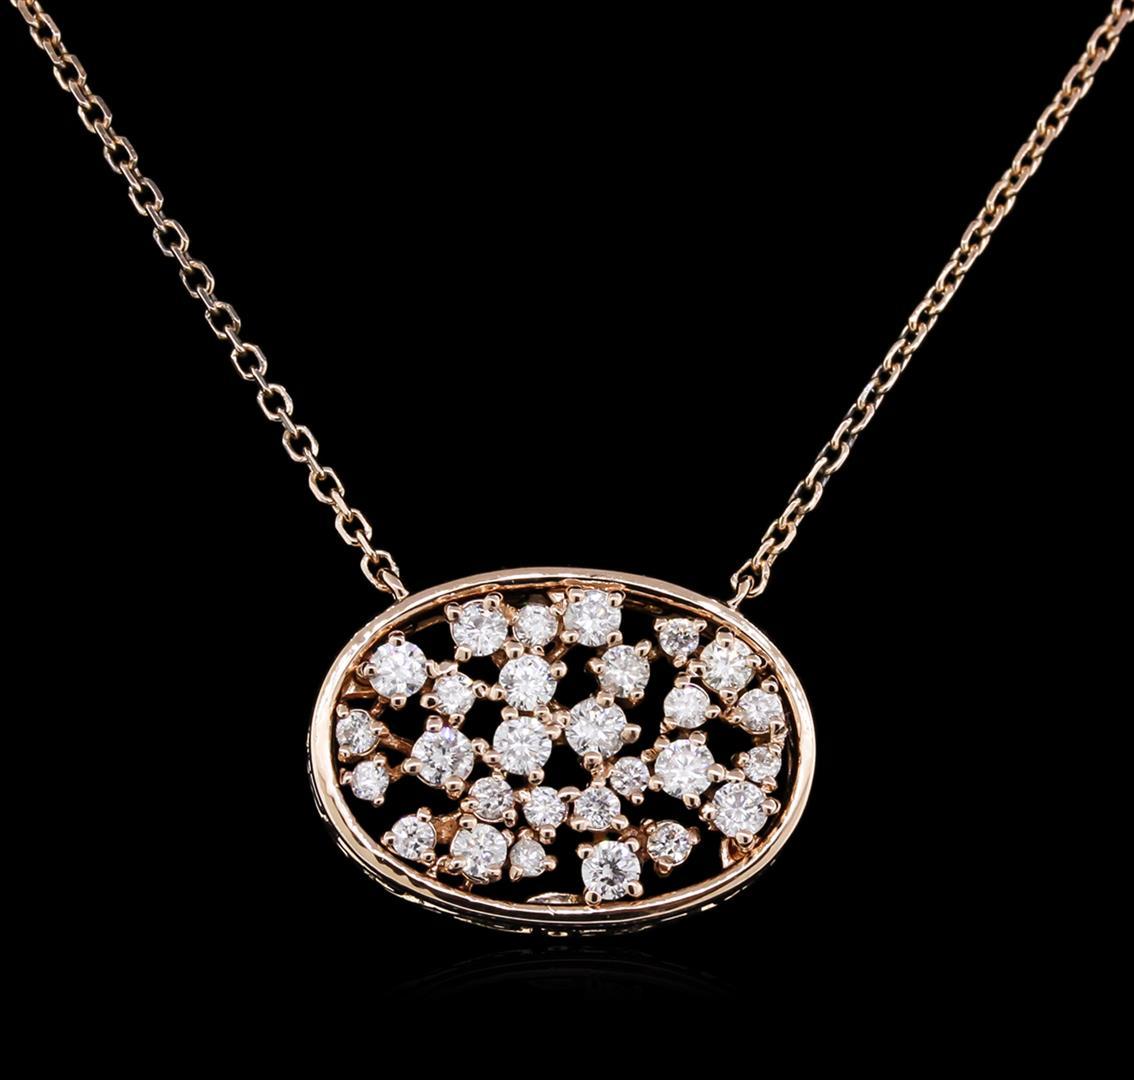 0.61 ctw Diamond Necklace - 14KT Rose Gold